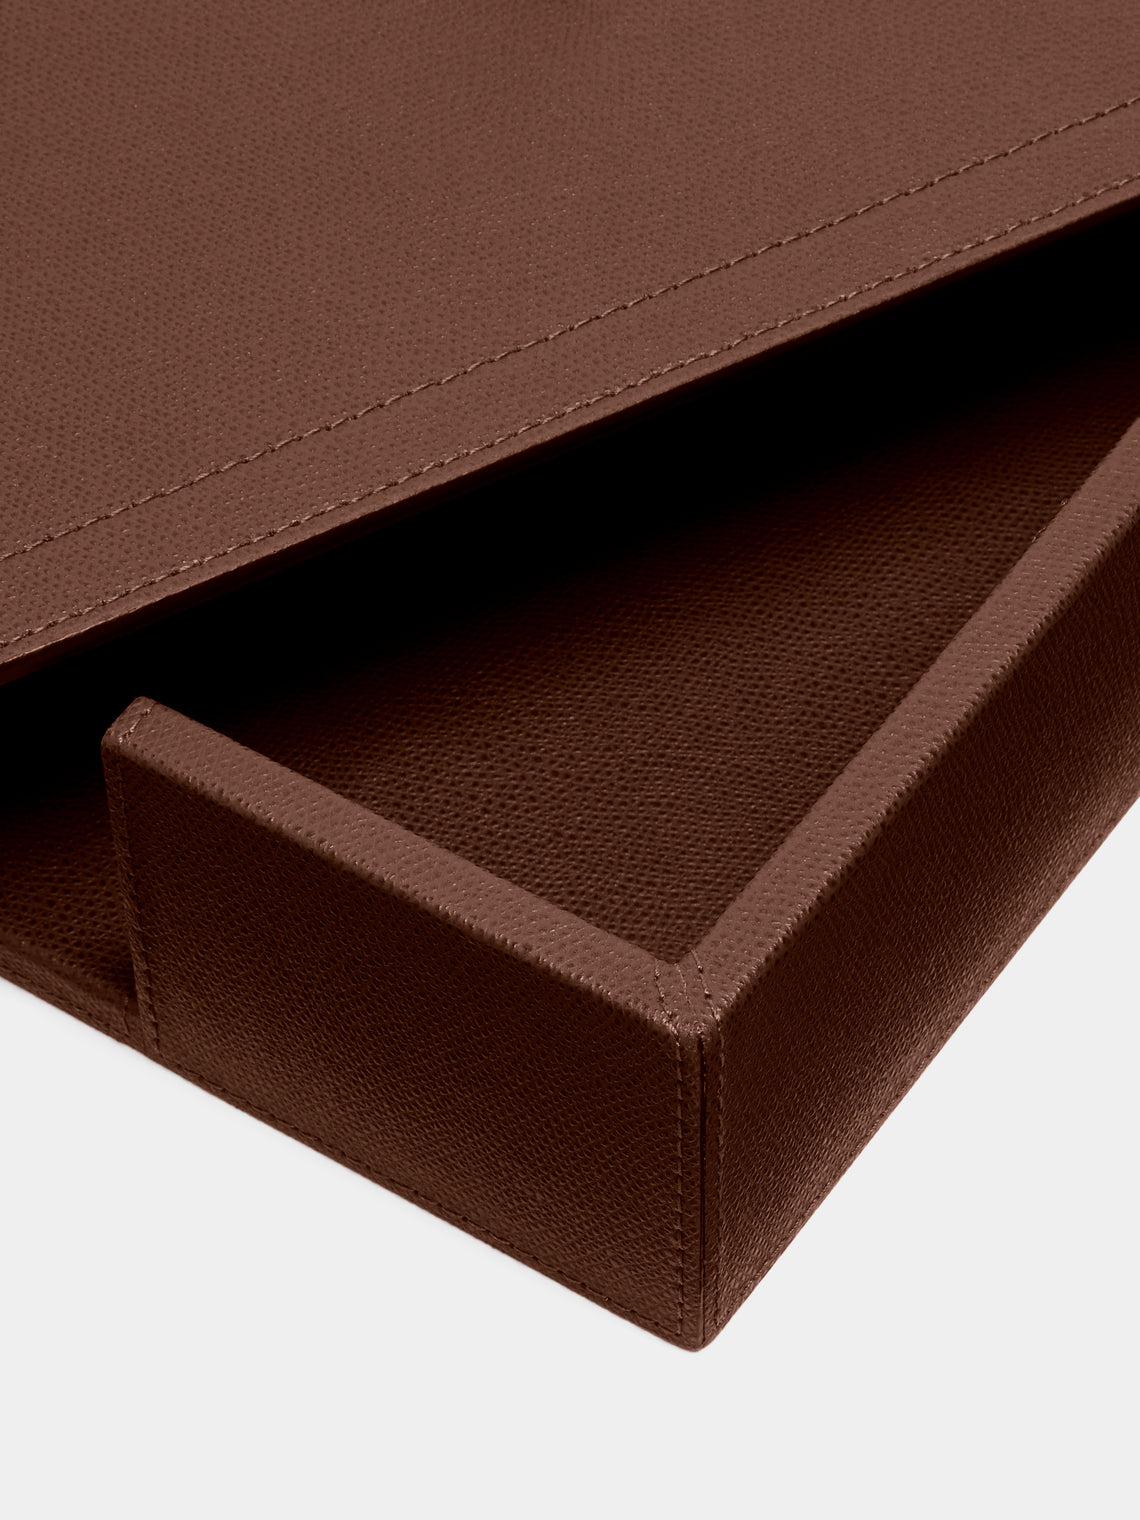 Giobagnara - Leopold Leather Document Holder - Brown - ABASK